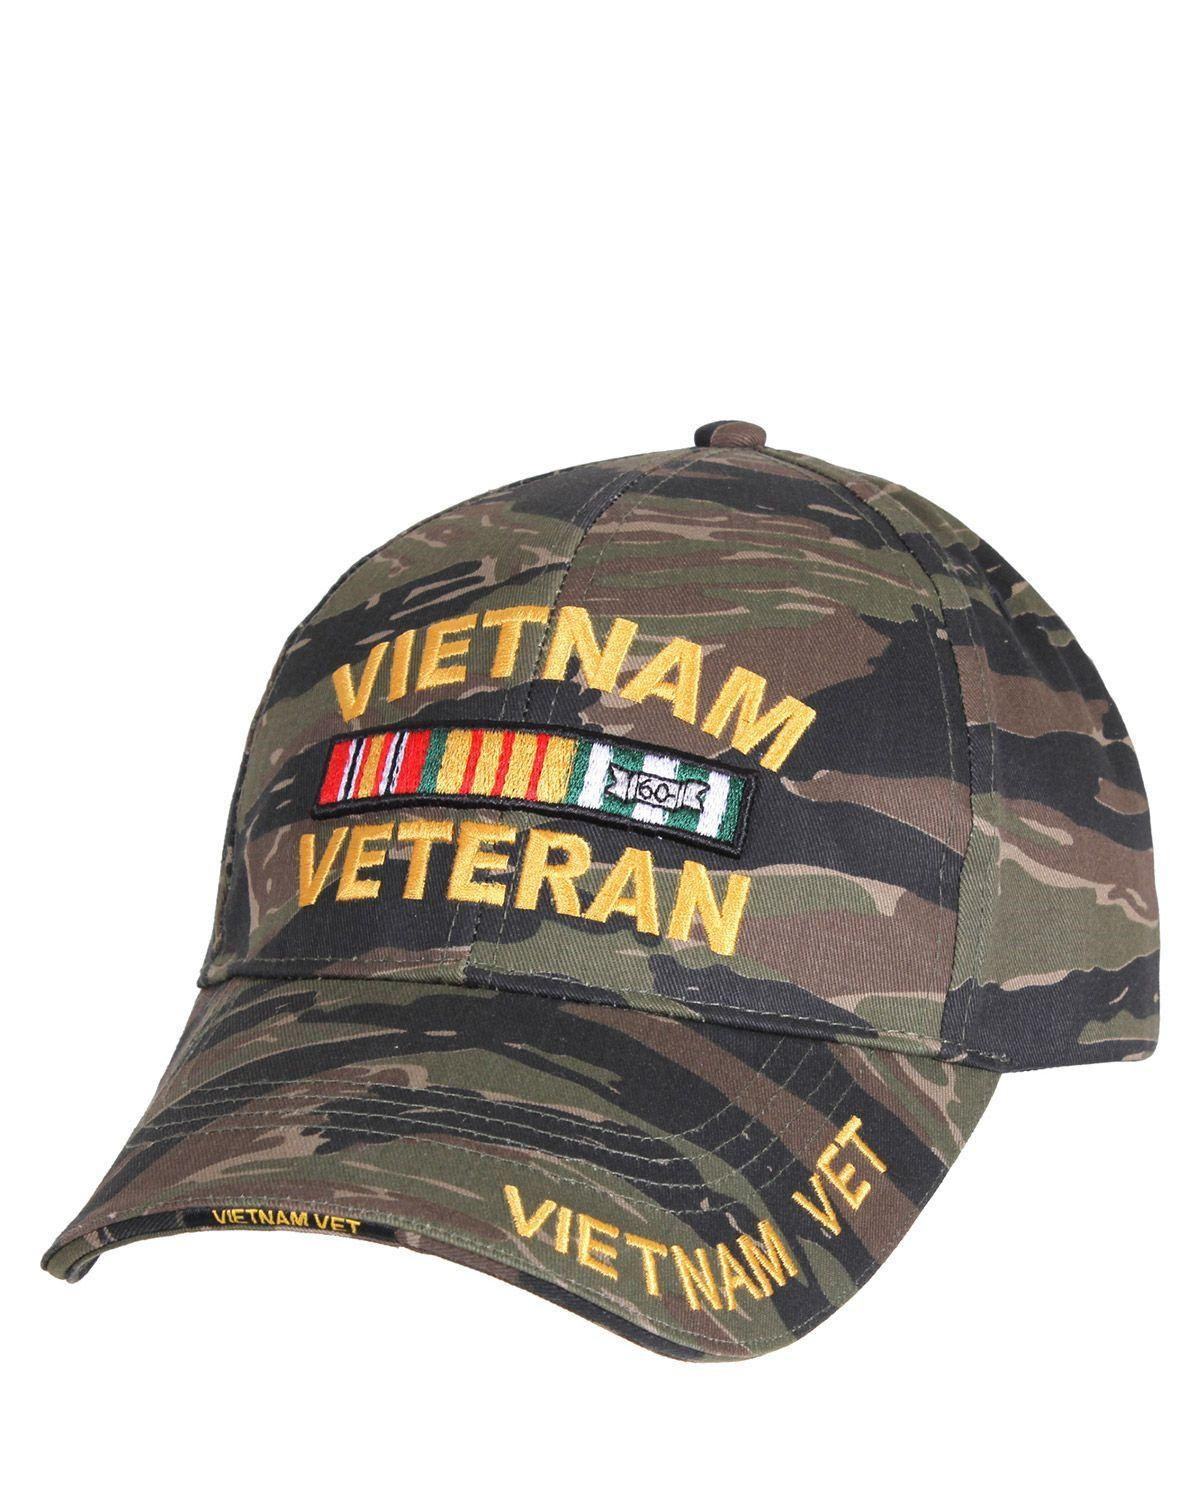 Rothco Deluxe Low Profile Cap (Tiger Stripe Vietnam Veteran, One Size)